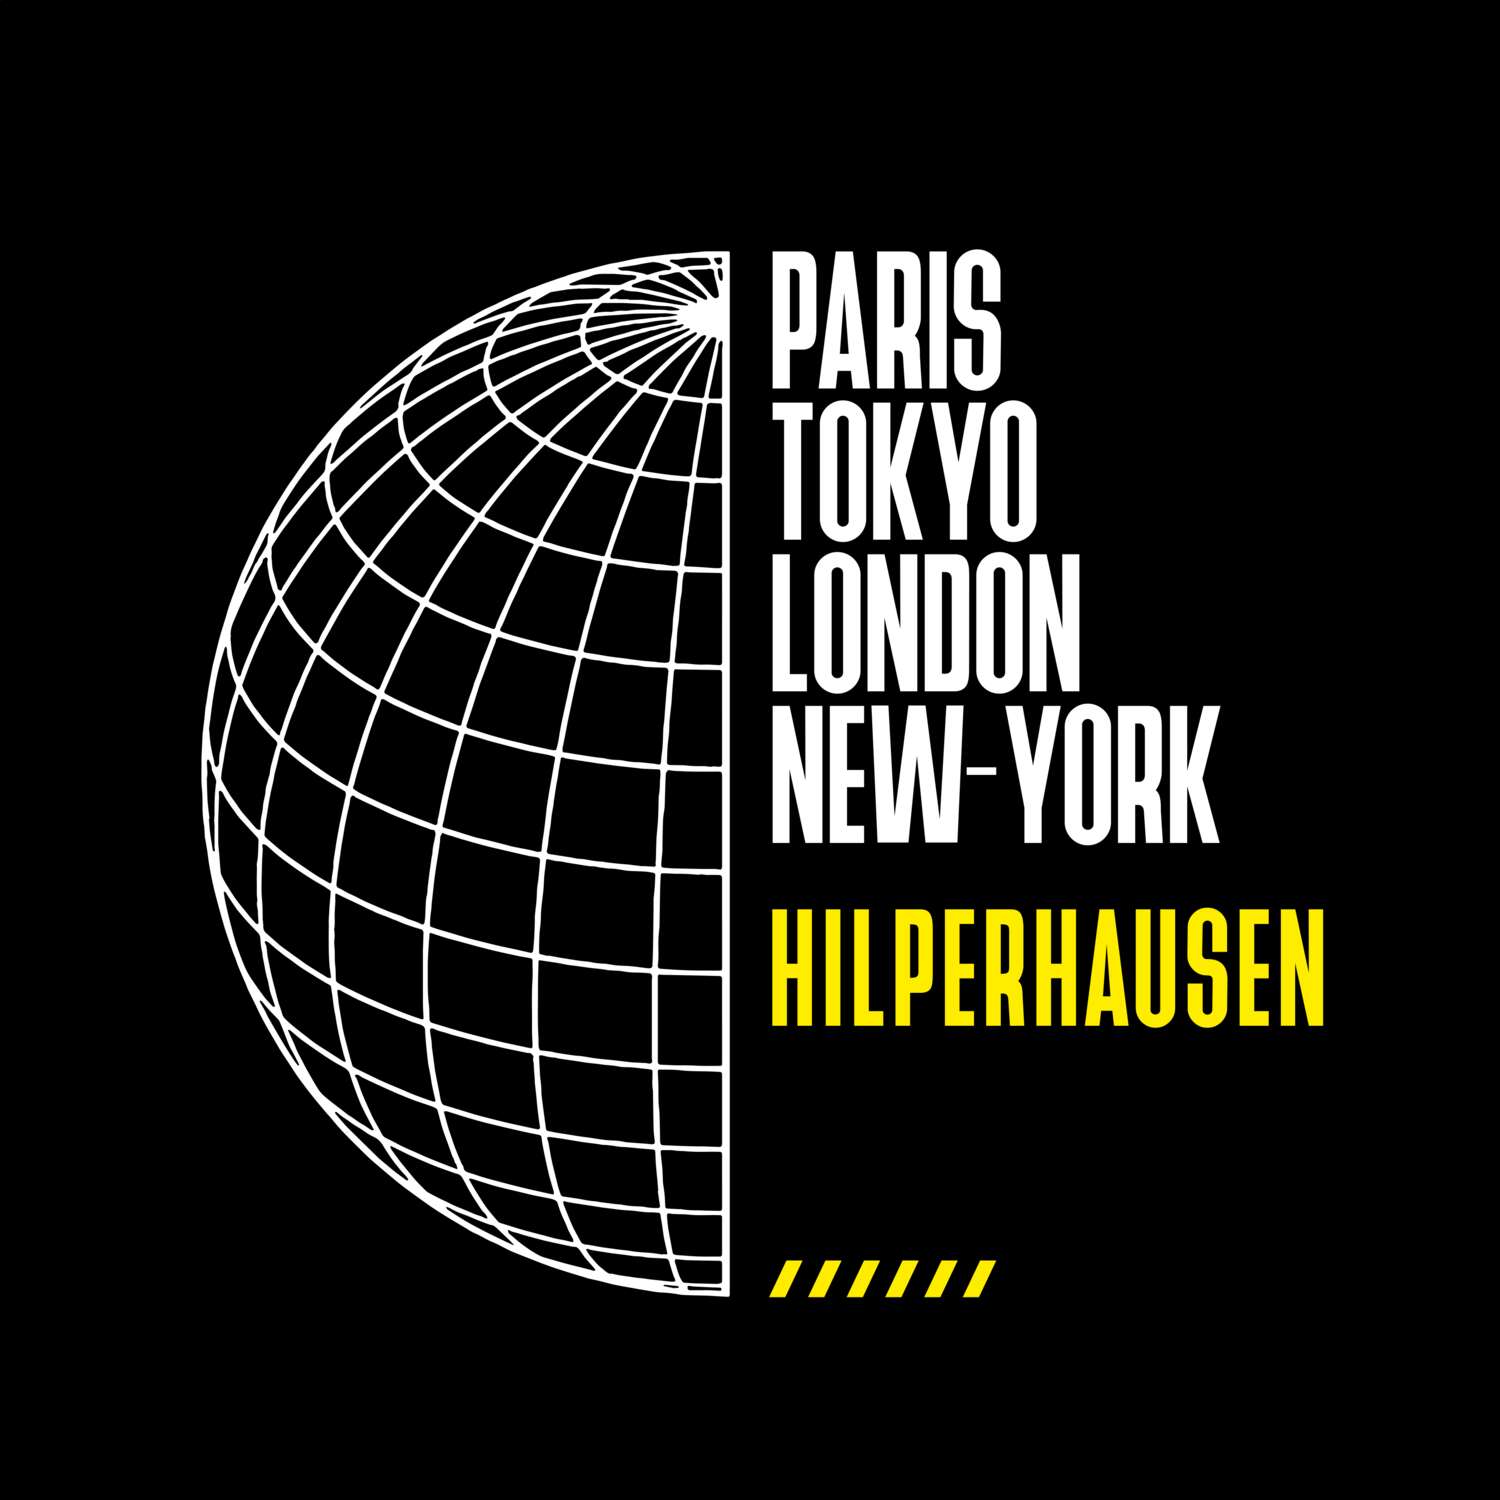 Hilperhausen T-Shirt »Paris Tokyo London«